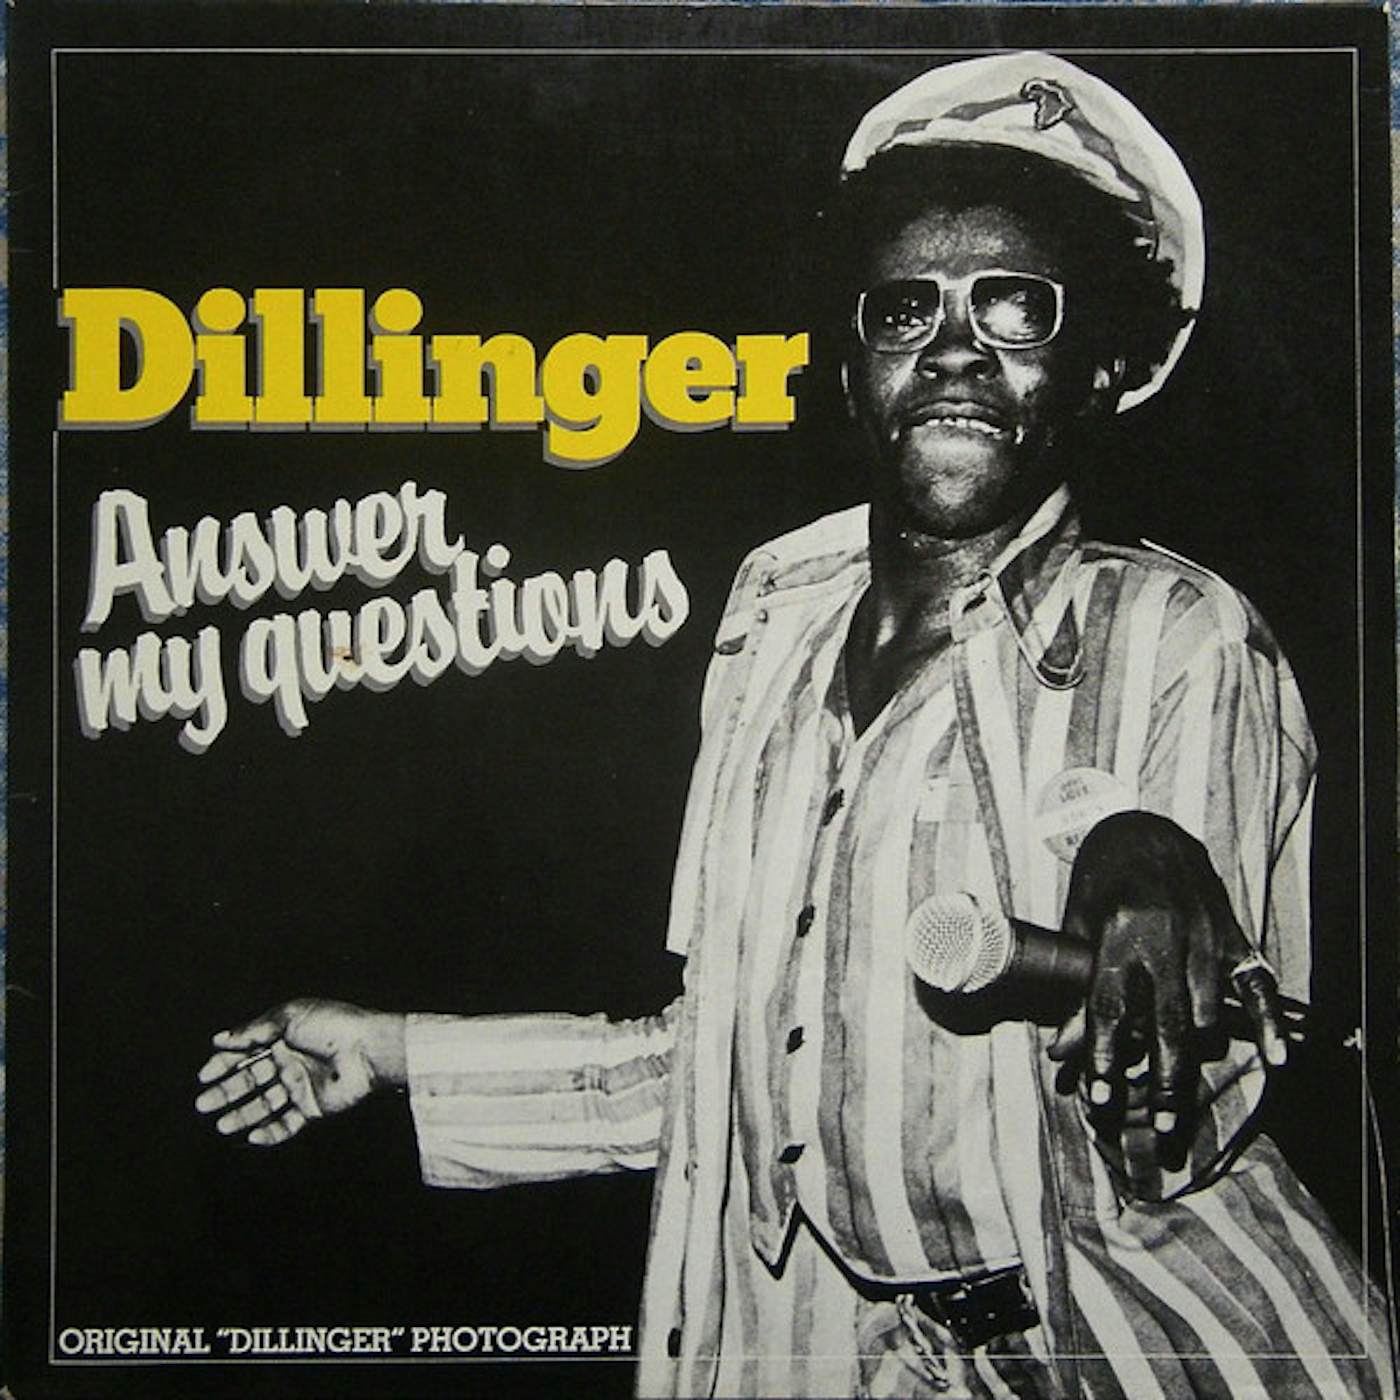 Dillinger Answer me question Vinyl Record